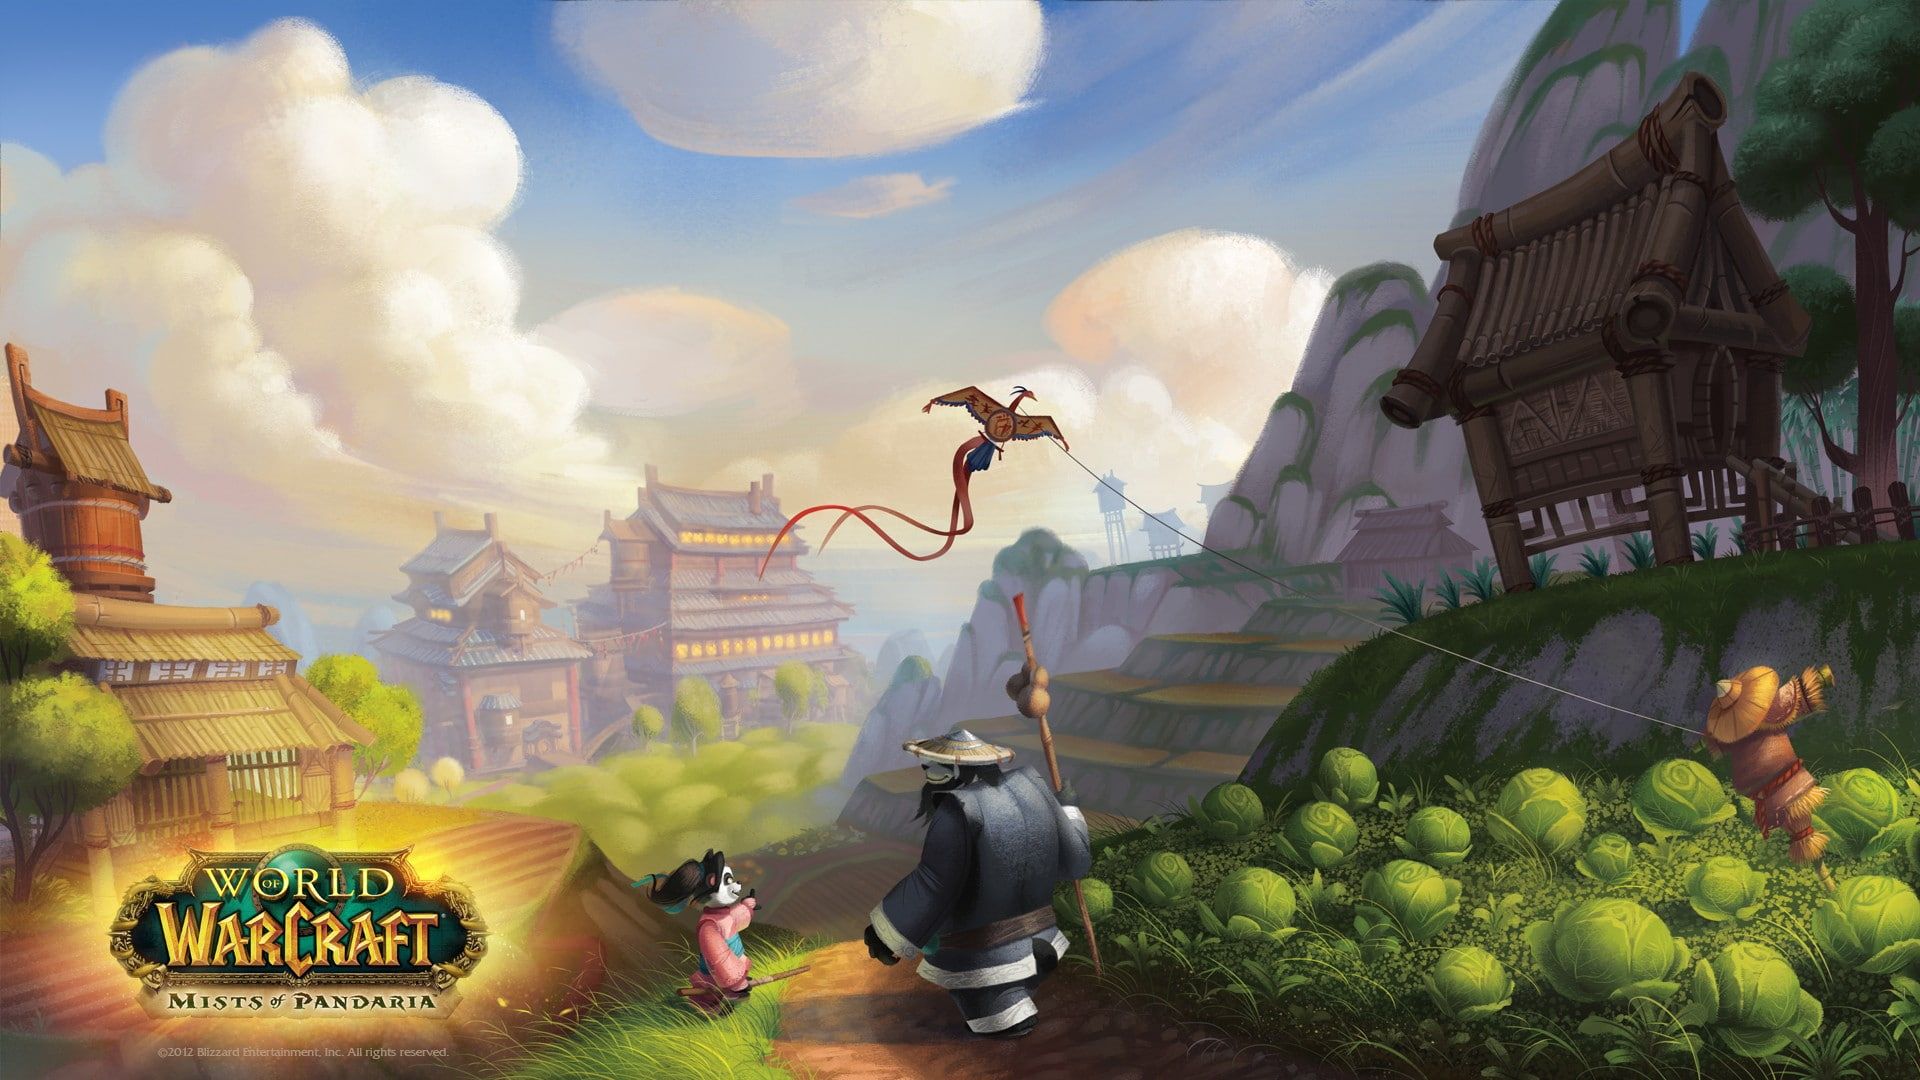 World of Warcraft World of Warcraft: Mists of Pandaria video games P # wallpaper #hdwallpaper #desktop. Illustration, Wow art